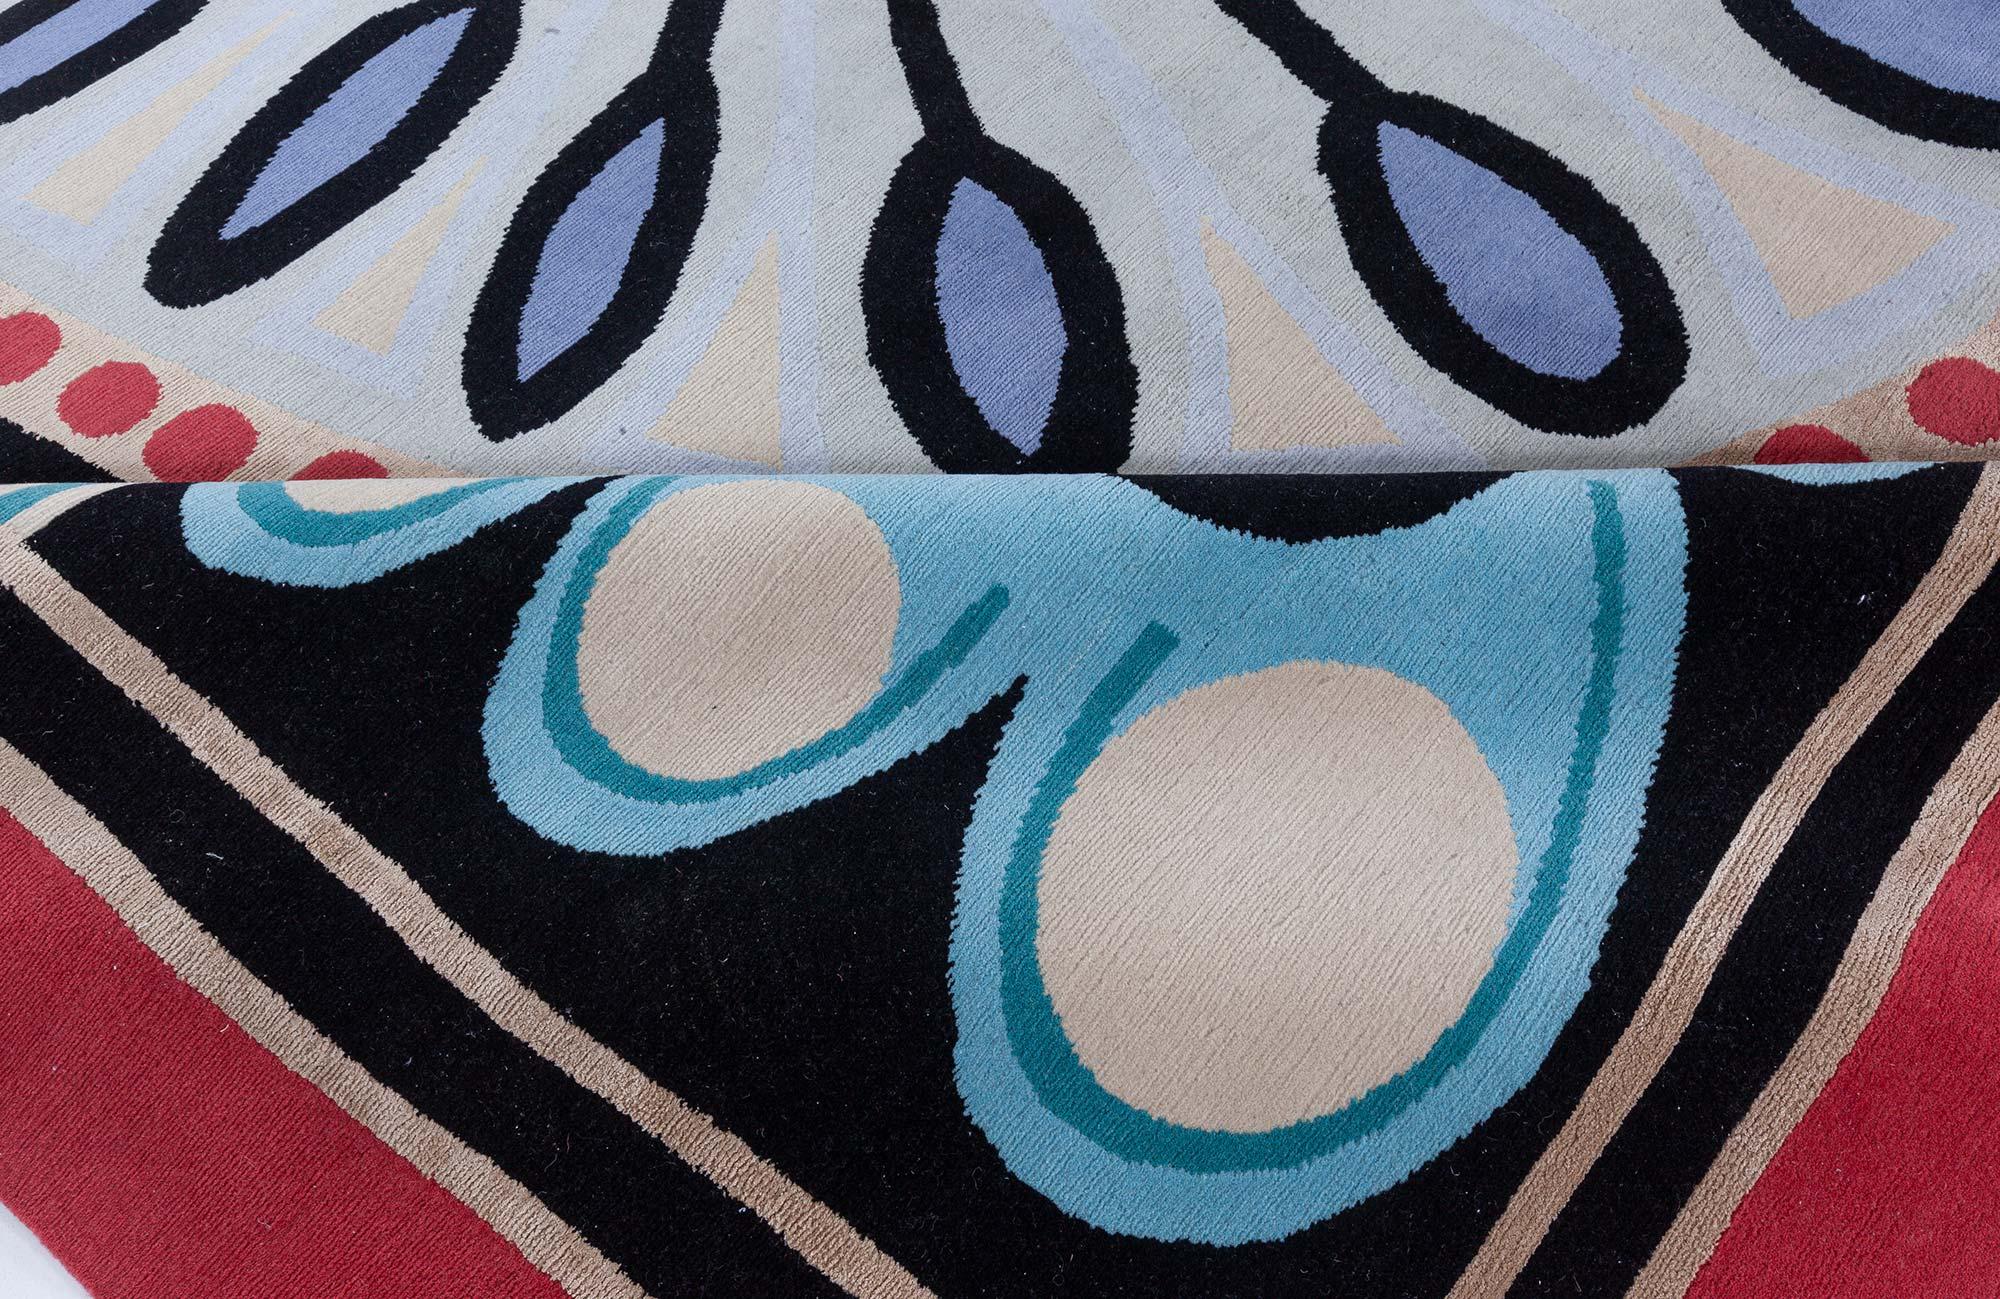 The Peacock Art Deco inspired wool rug by Doris Leslie Blau.
Size: 12'0